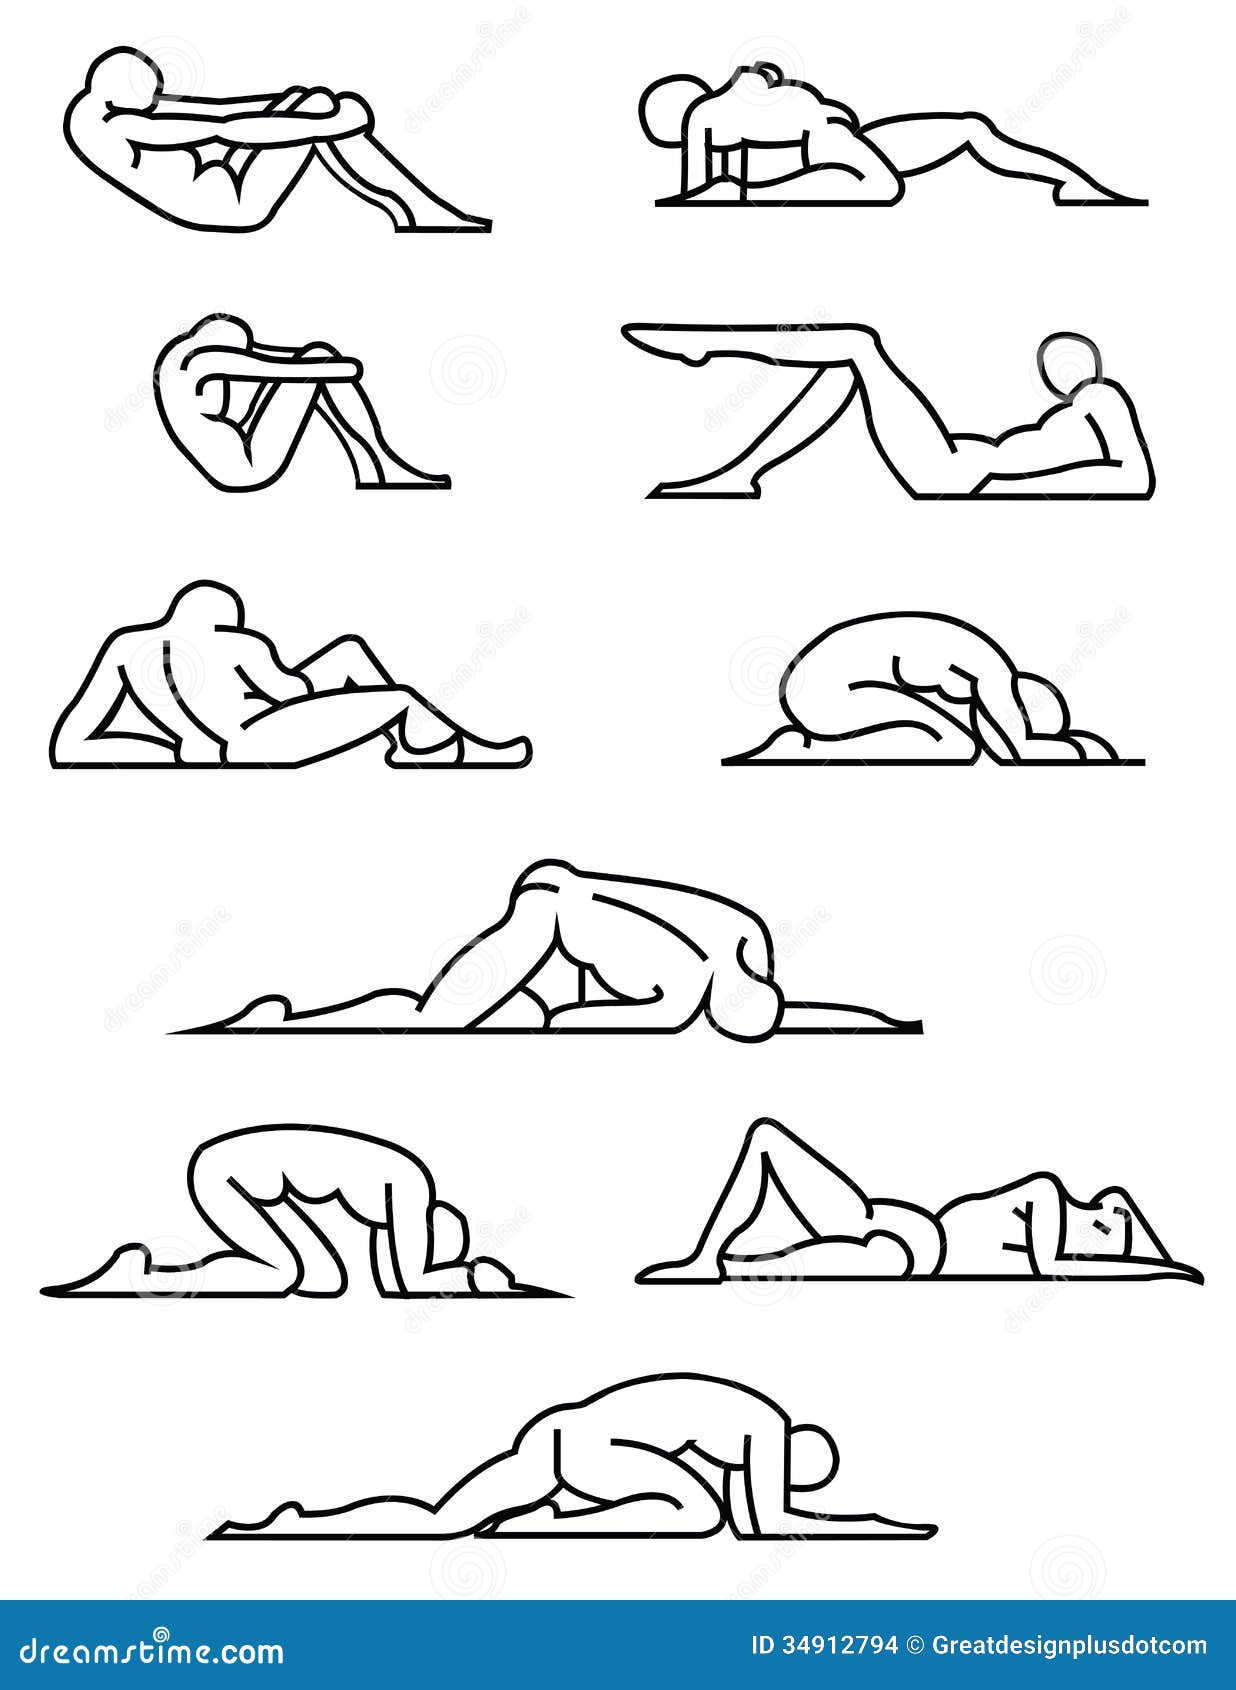 yoga poses drawings clip art - photo #22